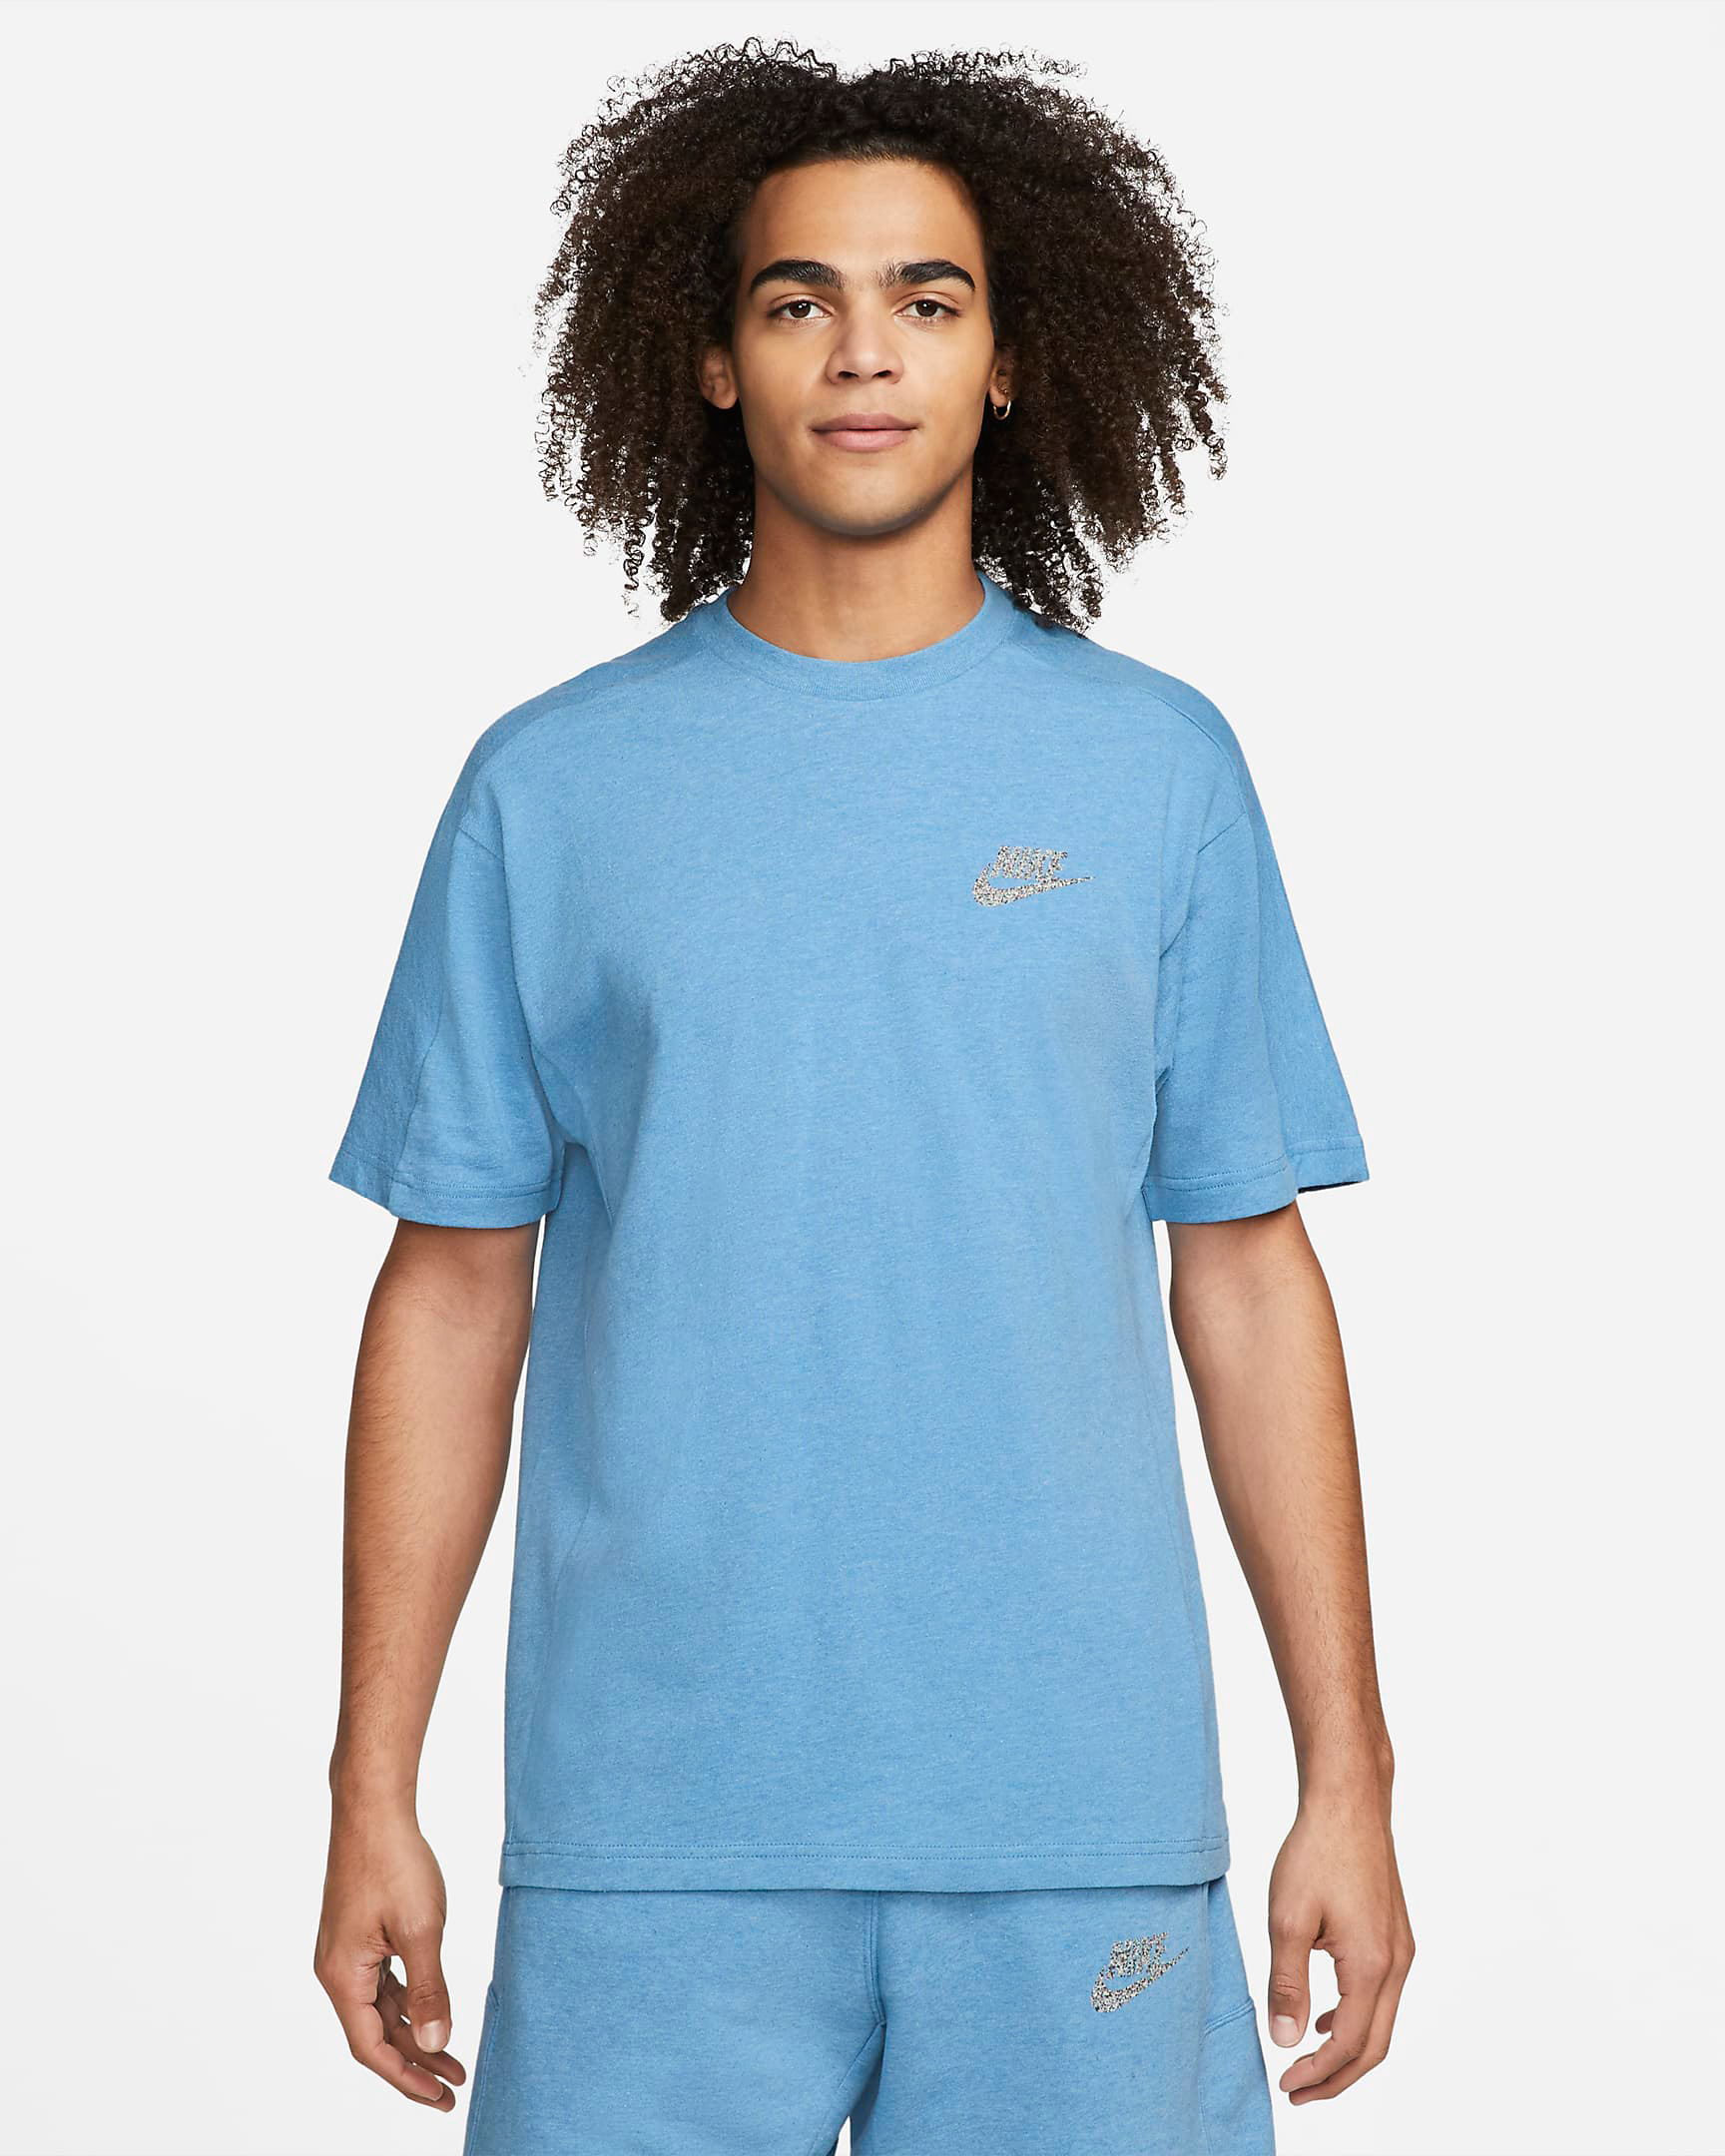 Nike Air Max 1 Blueprint Shirts Clothing Outfits